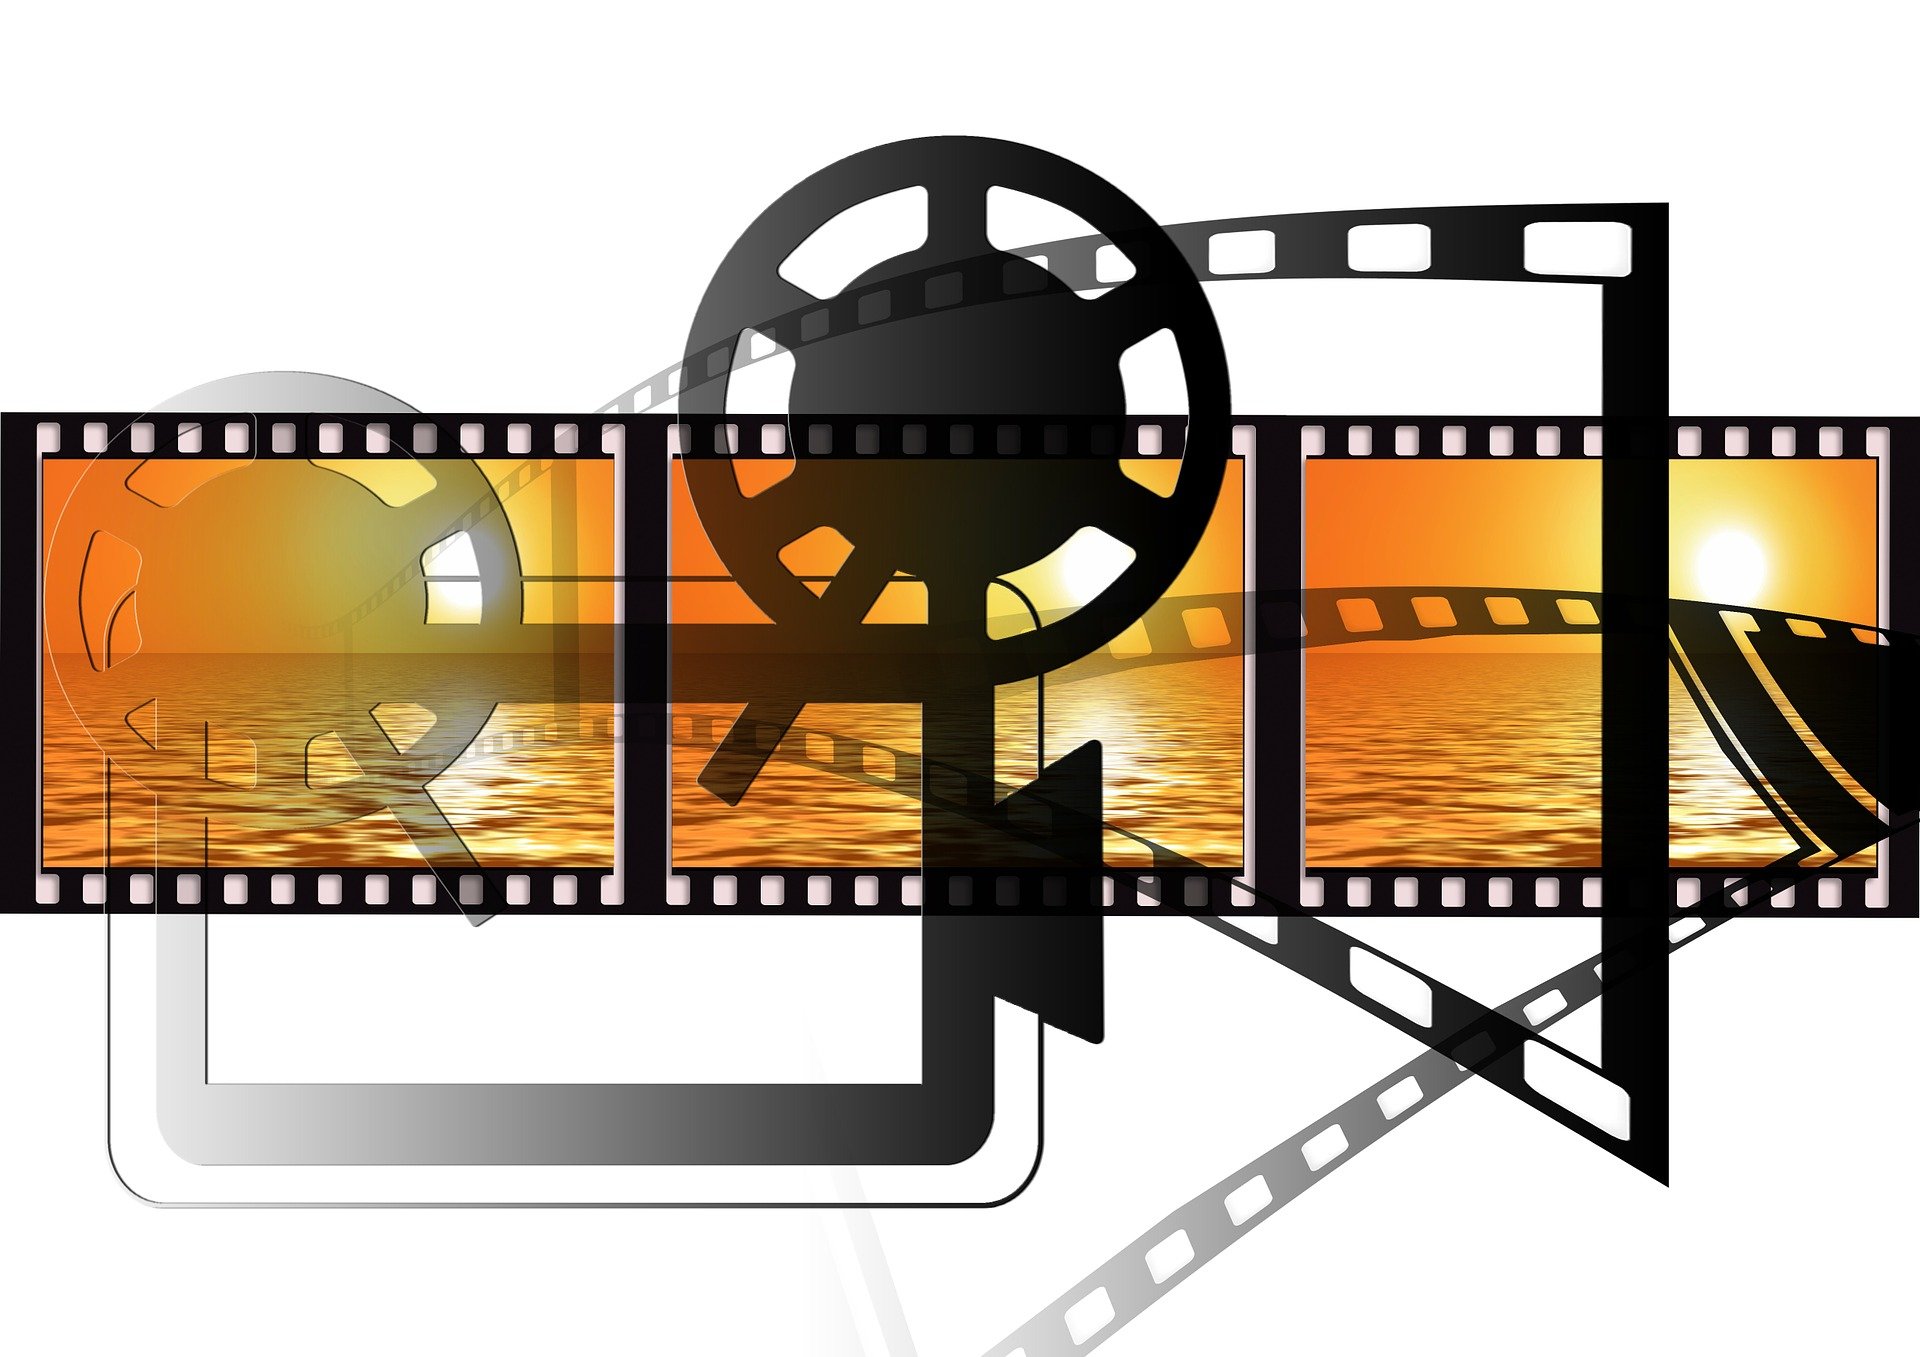 Особенности видеопроизводства онлайн-курсов  - 2020-2021 уч.г 109680